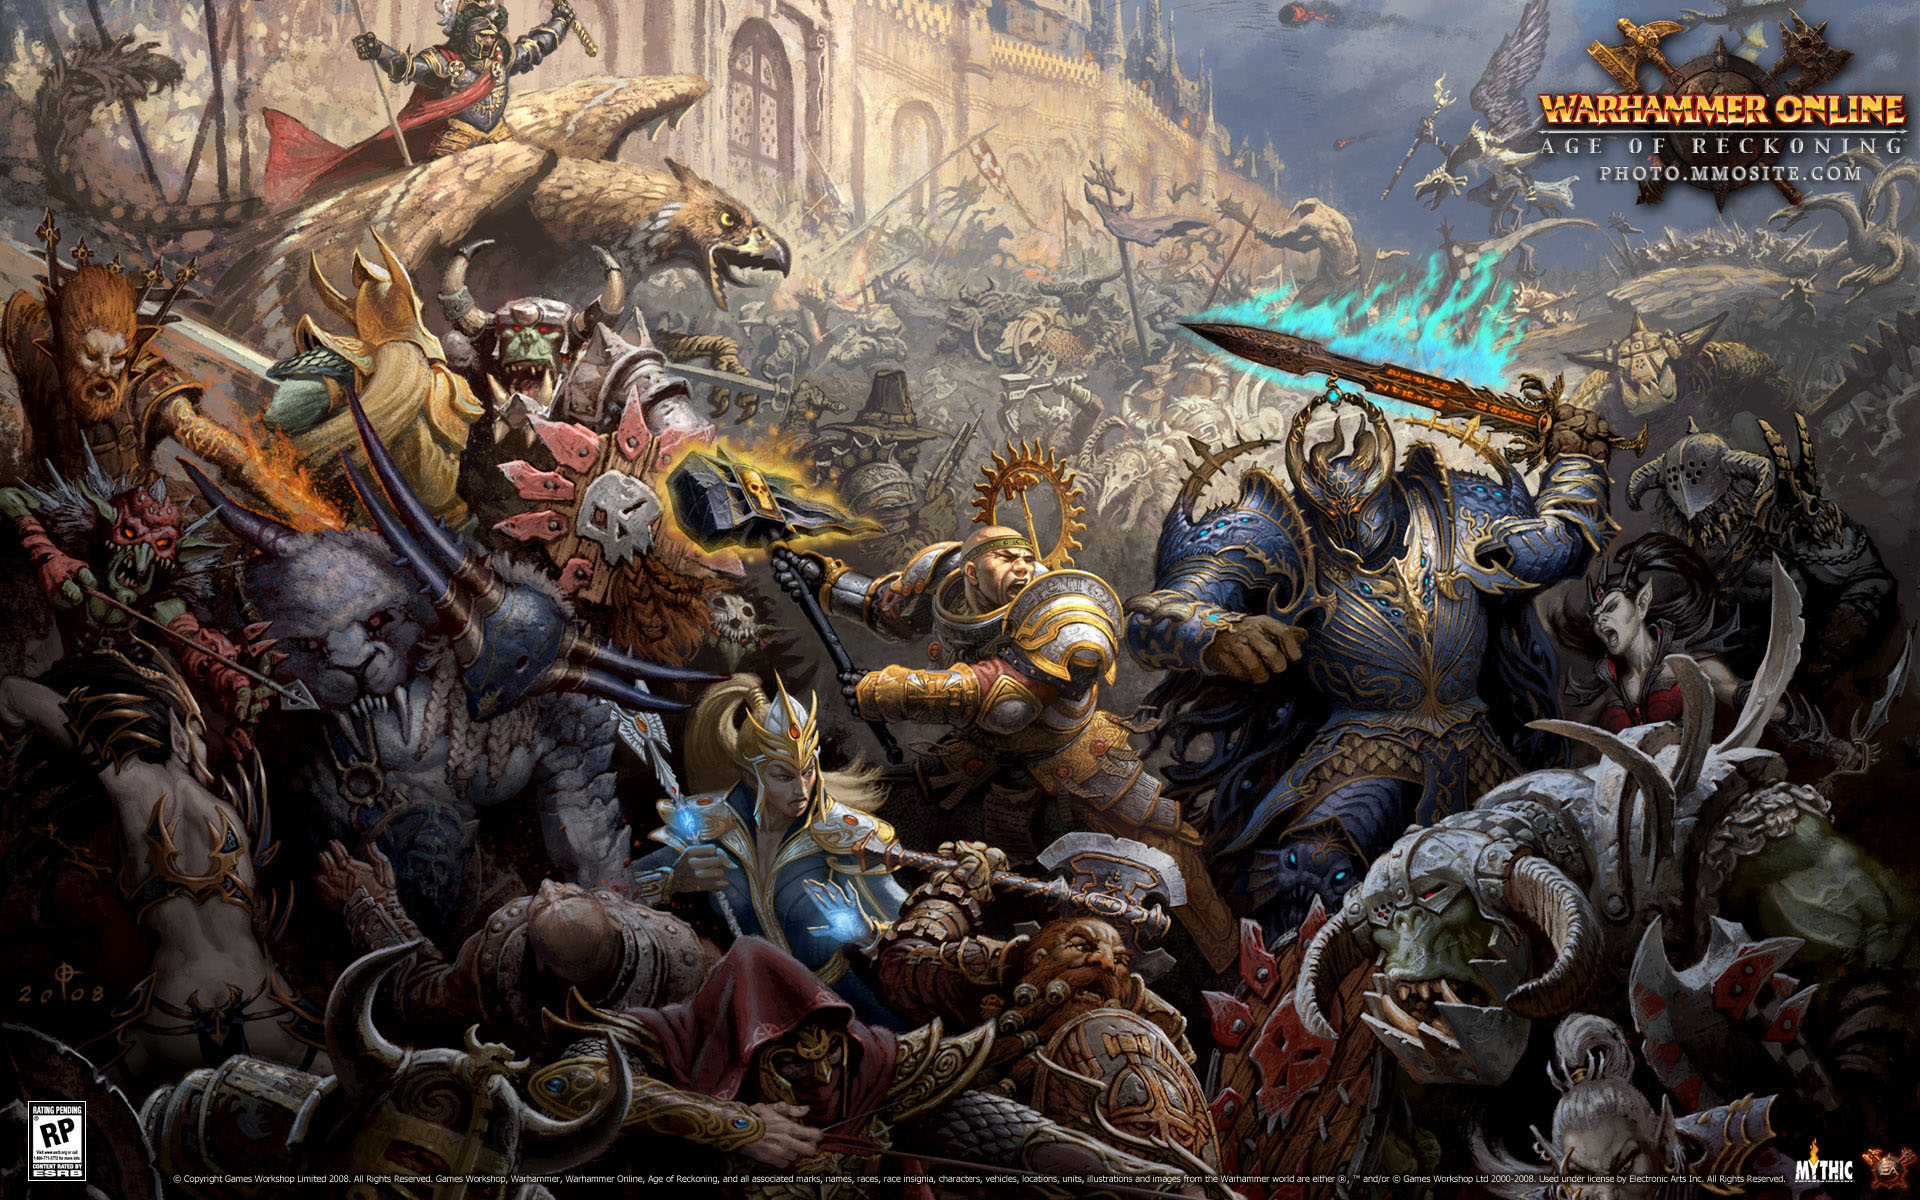 New Warhammer Online Wallpaper Mmorpg Photo News